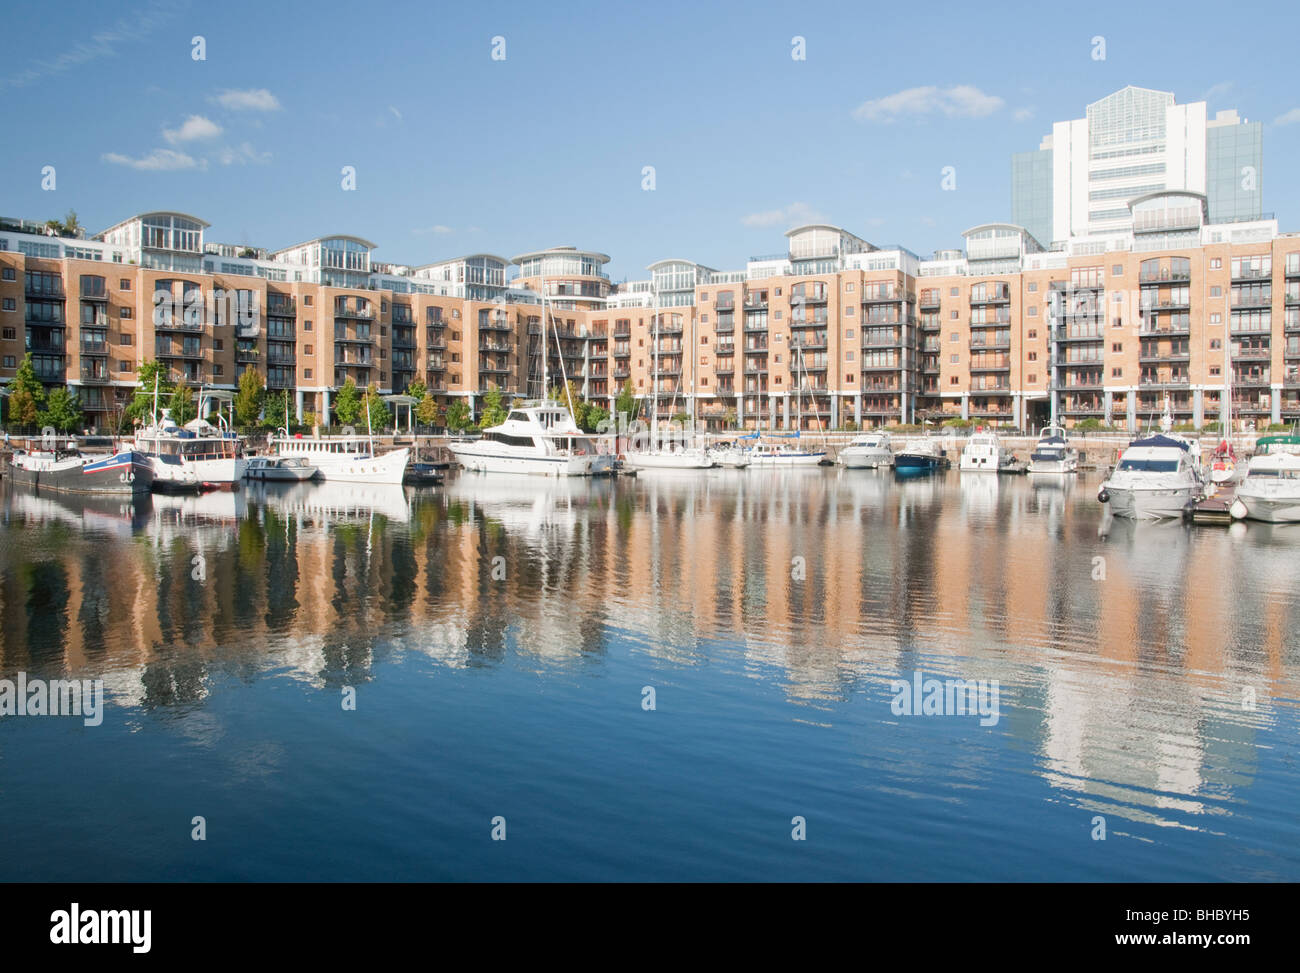 Waterside properties boats and moorings at St Katherine Docks, London Stock Photo